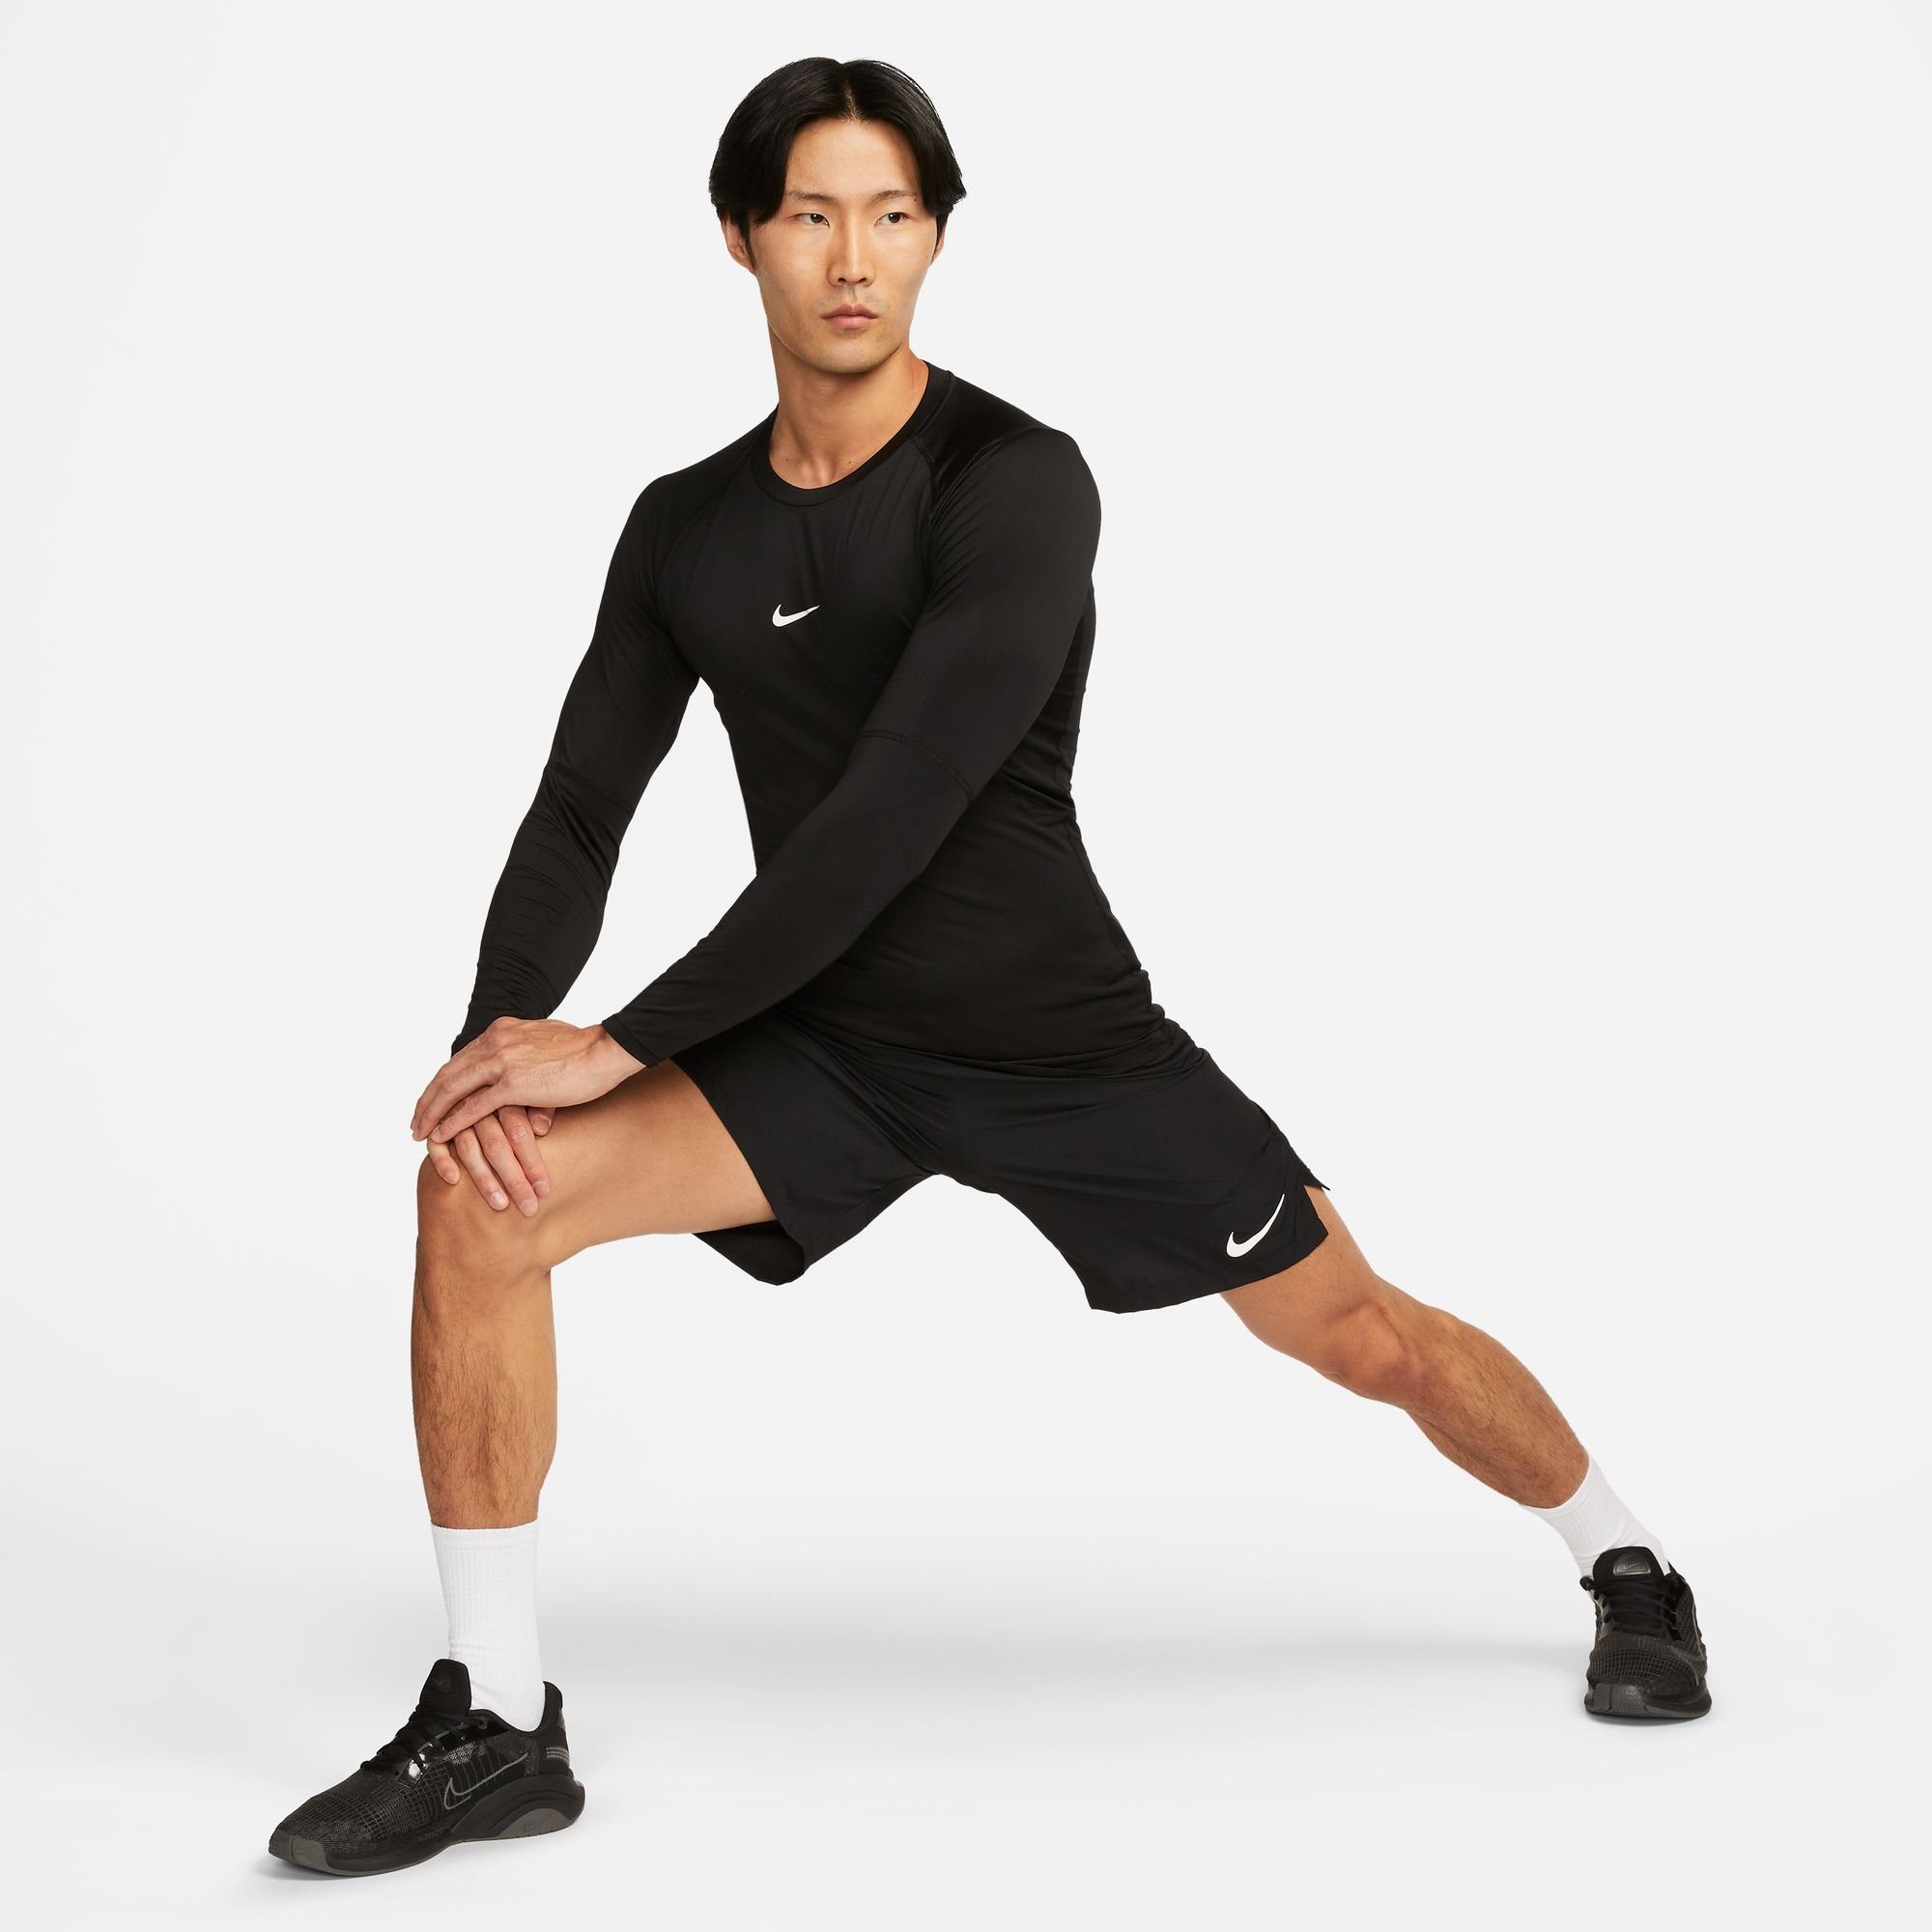 LONG-SLEEVE Nike PRO Trainingsshirt TOP MEN'S DRI-FIT